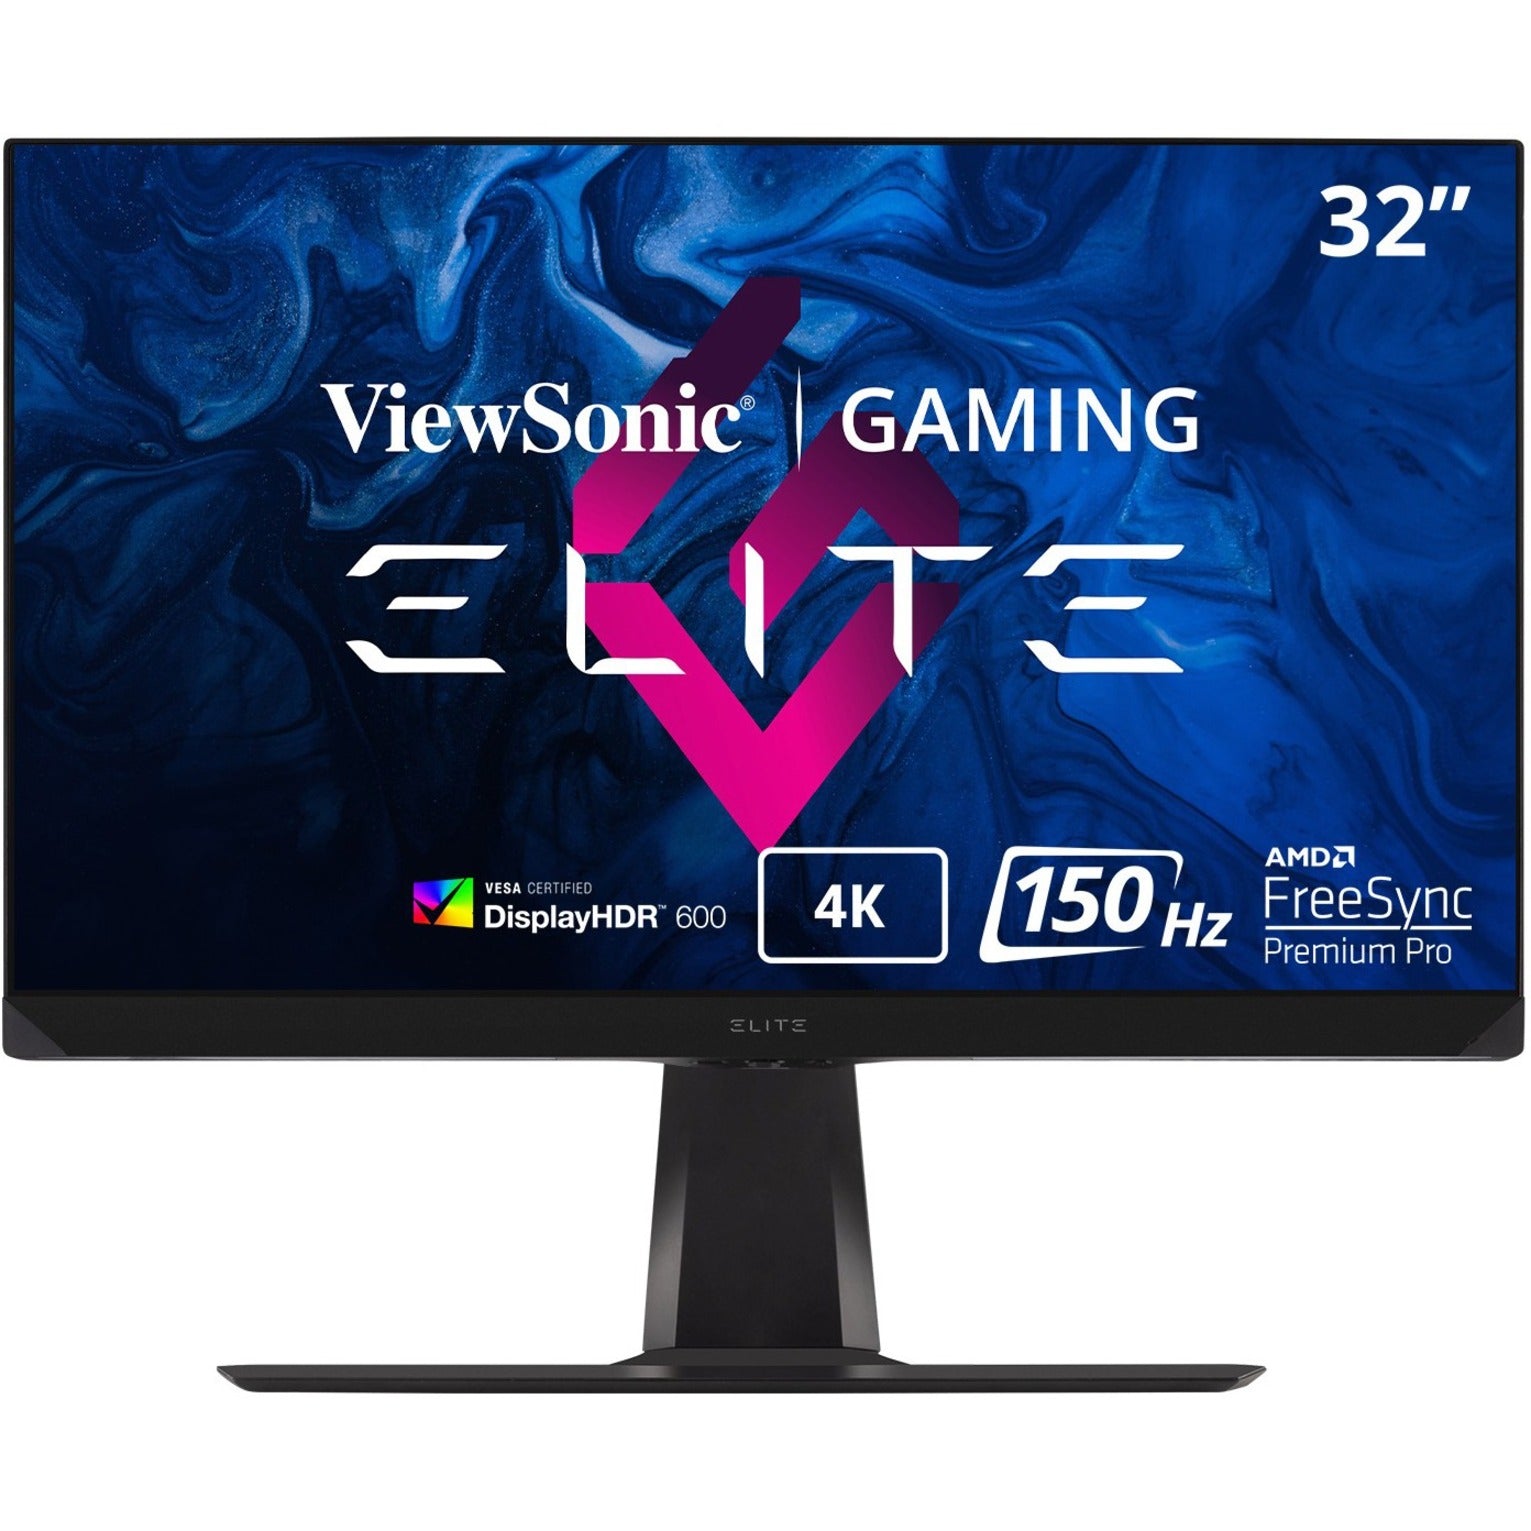 ViewSonic XG320U Elite Gaming Monitor, 32 4K UHD, 150Hz 1ms, AMD FreeSync Premium Pro, Advanced Ergonomics